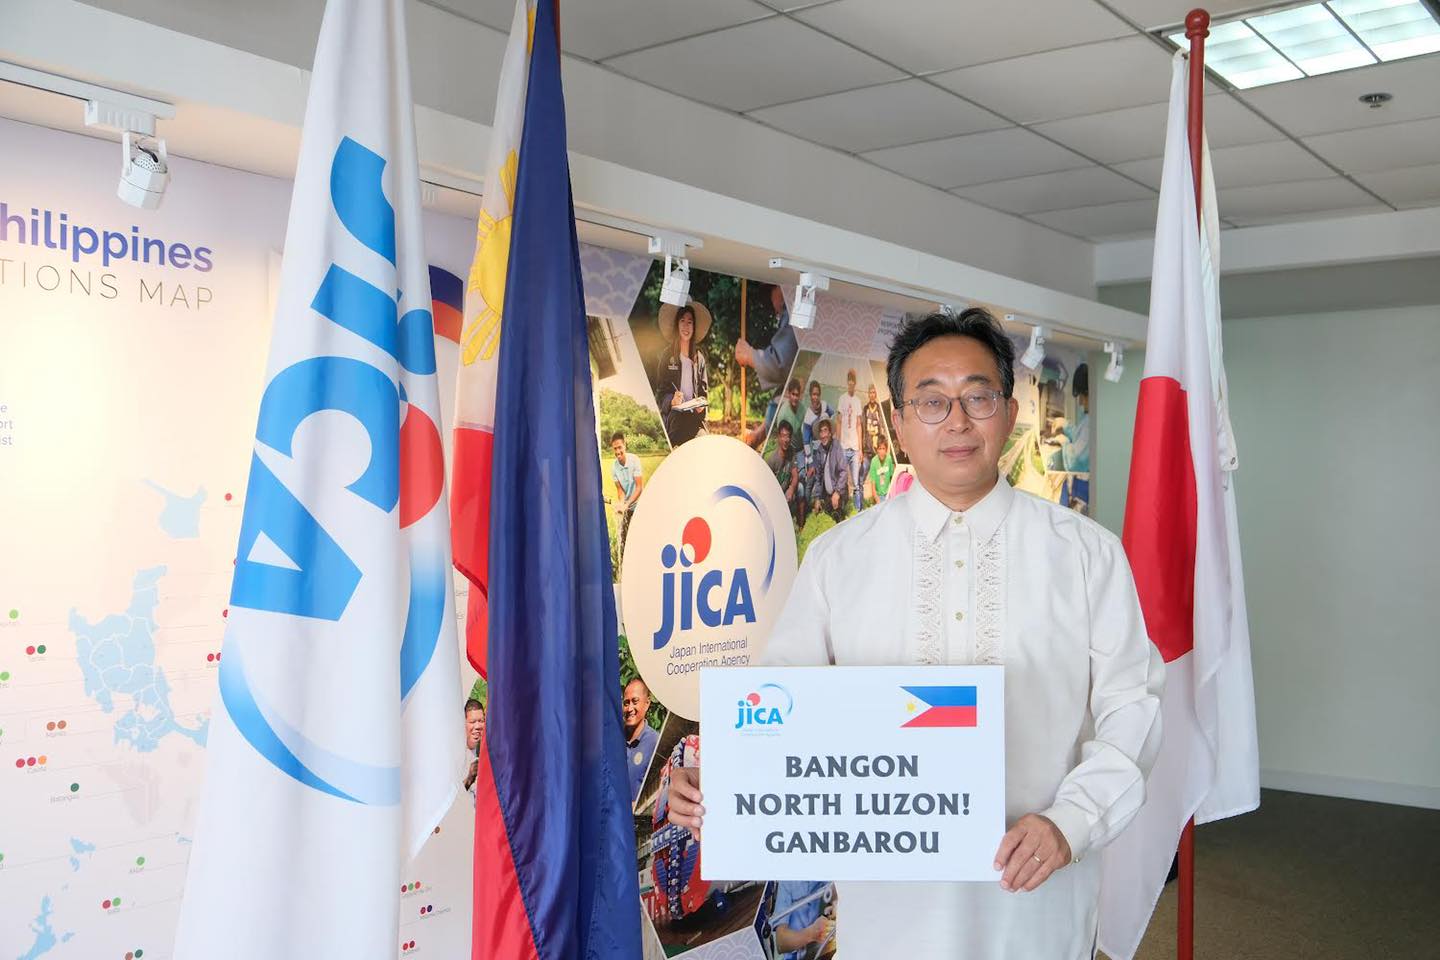 JICA Chief Representative to the Philippines Takema Sakamoto